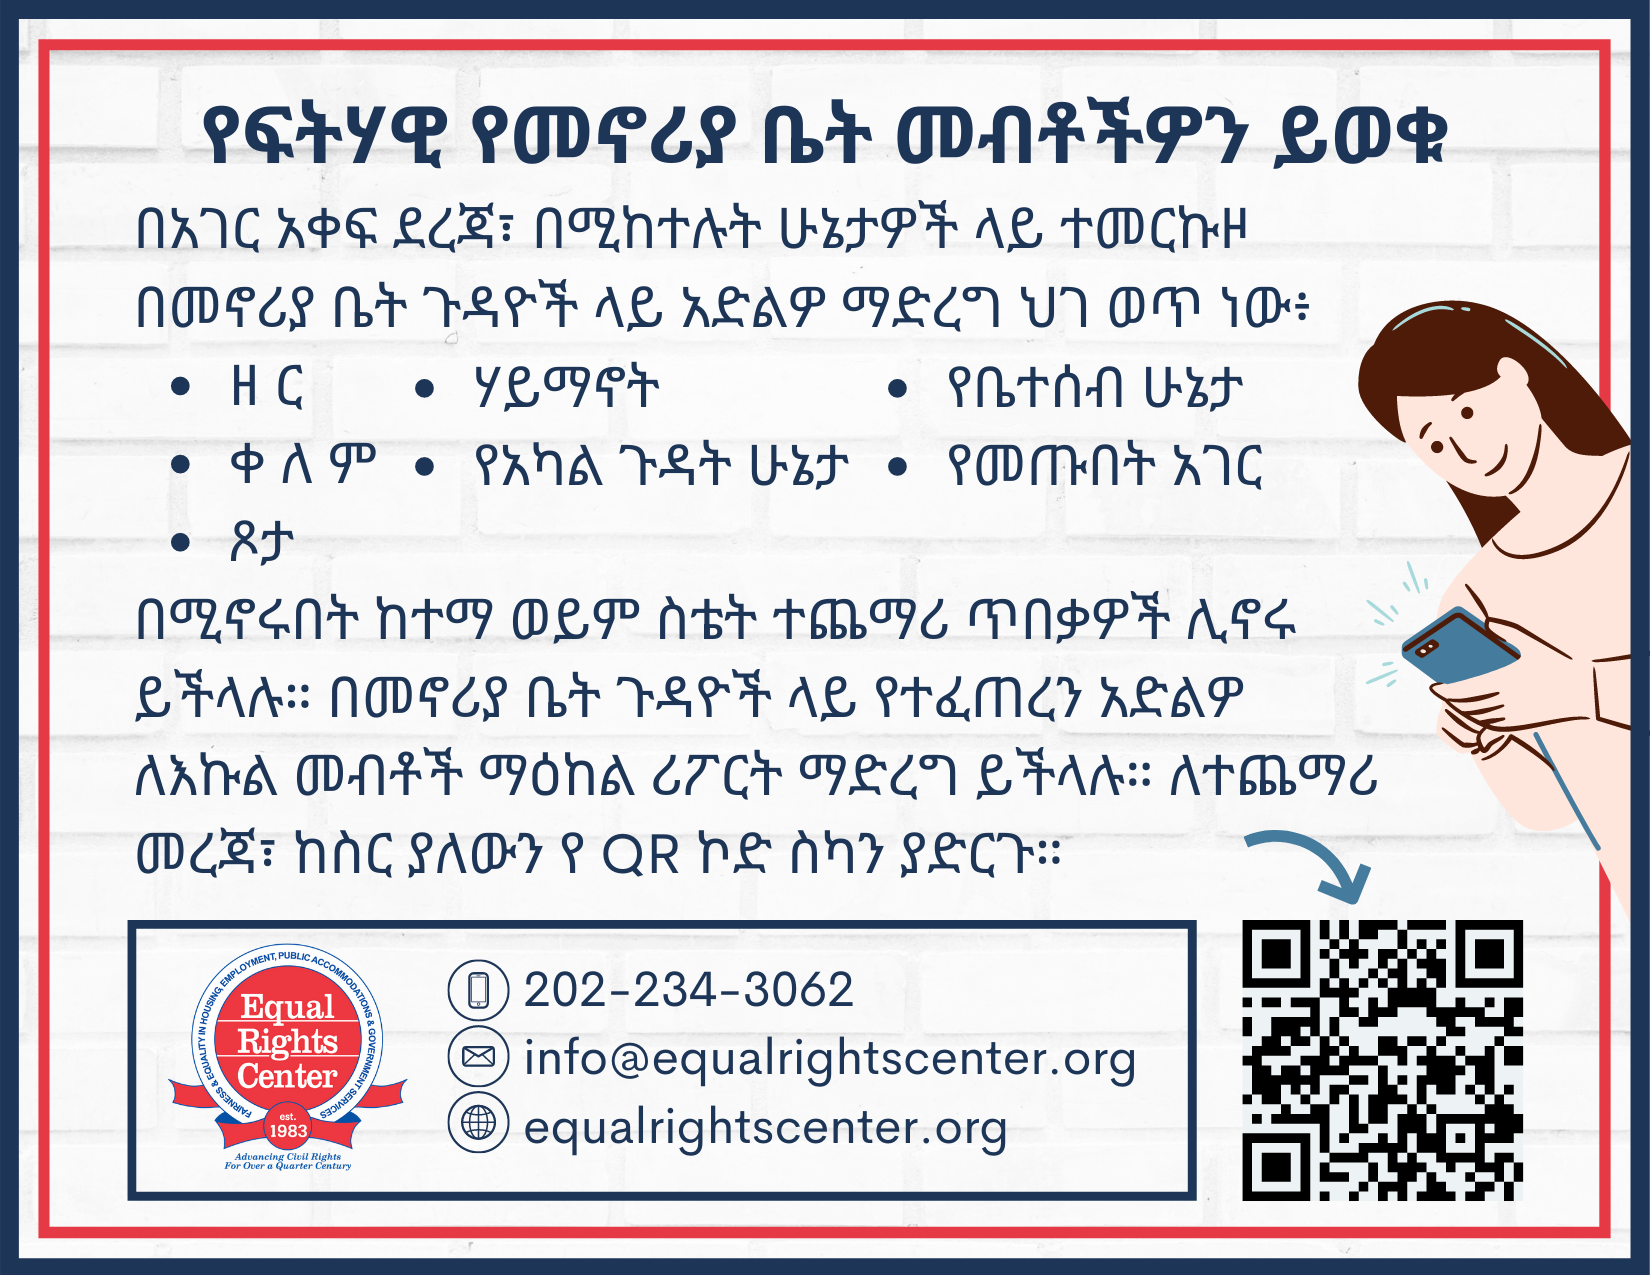 Front of postcard reads, "የፍትሃዊ የመኖሪያ ቤት መብቶችዎን ይወቁ በአገር አቀፍ ደረጃ፣ በሚከተሉት ሁኔታዎች ላይ ተመርኩዞ በመኖሪያ ቤት ጉዳዮች ላይ አድልዎ ማድረግ ህገ ወጥ ነው፥ • ዘ ር • ሃይማኖት • የቤተሰብ ሁኔታ • ቀ ለ ም • የአካል ጉዳት ሁኔታ • የመጡበት አገር • ጾታ በሚኖሩበት ከተማ ወይም ስቴት ተጨማሪ ጥበቃዎች ሊኖሩ ይችላሉ። በመኖሪያ ቤት ጉዳዮች ላይ የተፈጠረን አድልዎ ለእኩል መብቶች ማዕከል ሪፖርት ማድረግ ይችላሉ። ለተጨማሪ መረጃ፣ ከስር ያለውን የ QR ኮድ ስካን ያድርጉ። 202-234-3062. info@equalrightscenter.org. equalrightscenter.org."